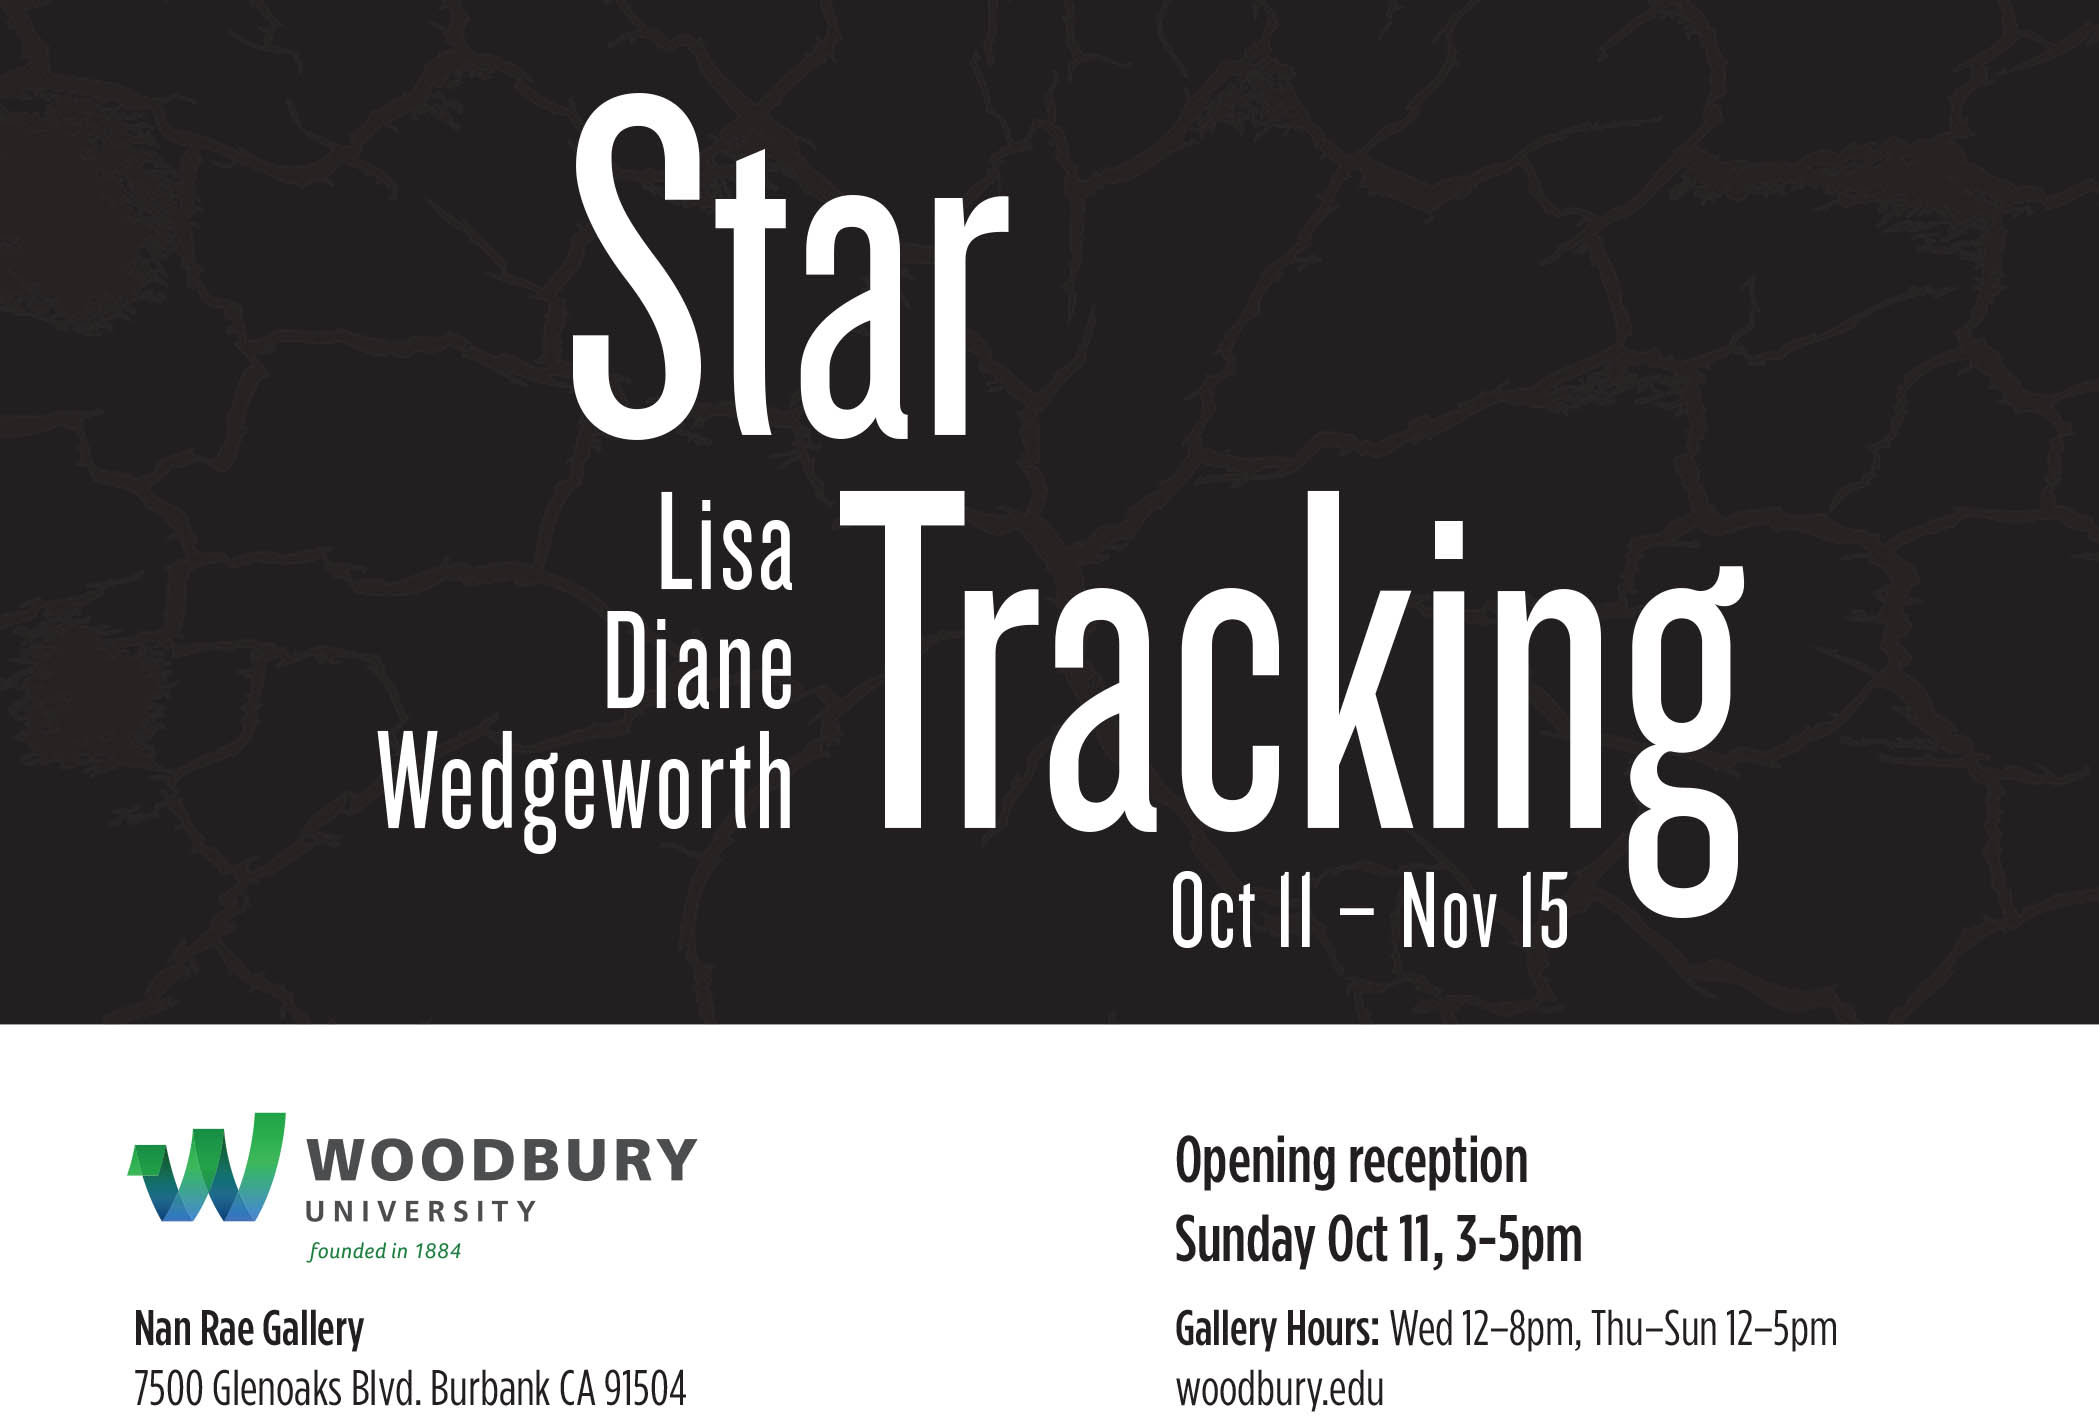 Lisa Diane Wedgeworth: Star Tracking